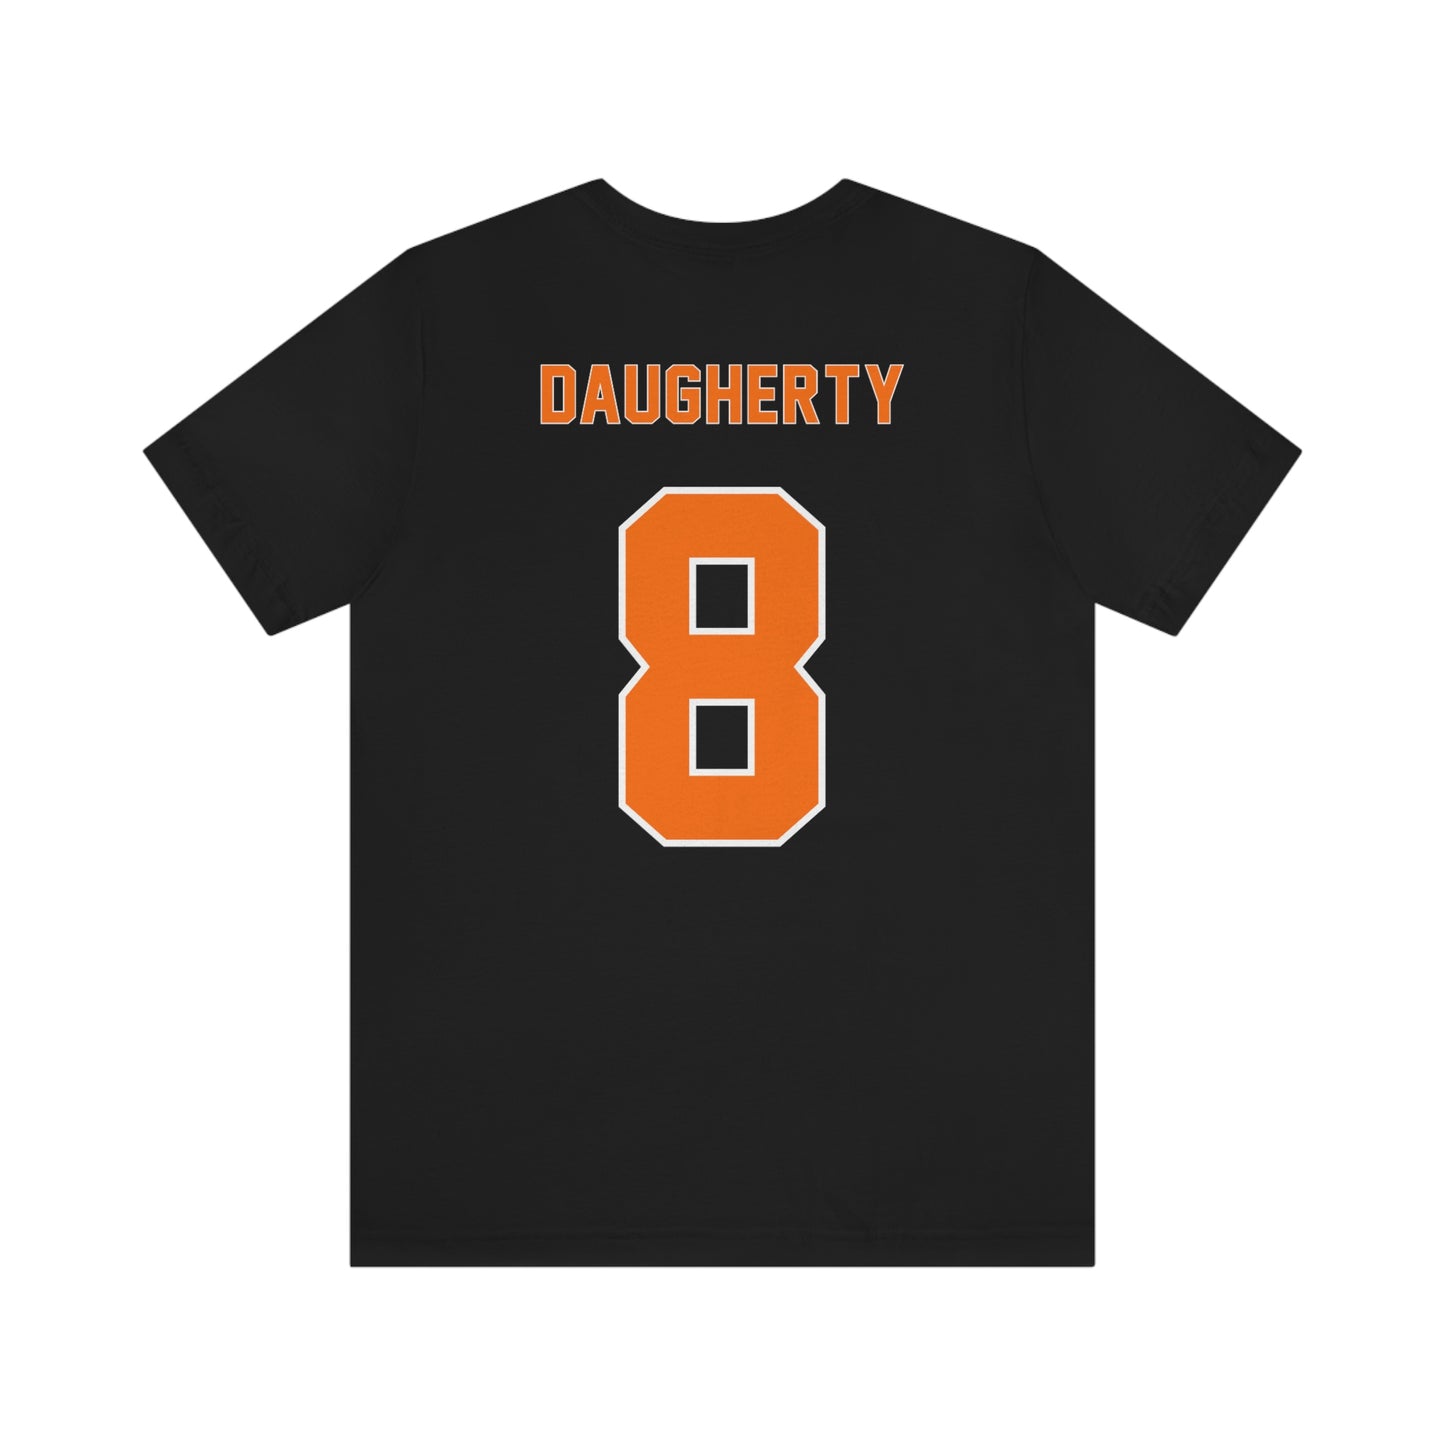 Ian Daugherty Unisex Jersey Shirt